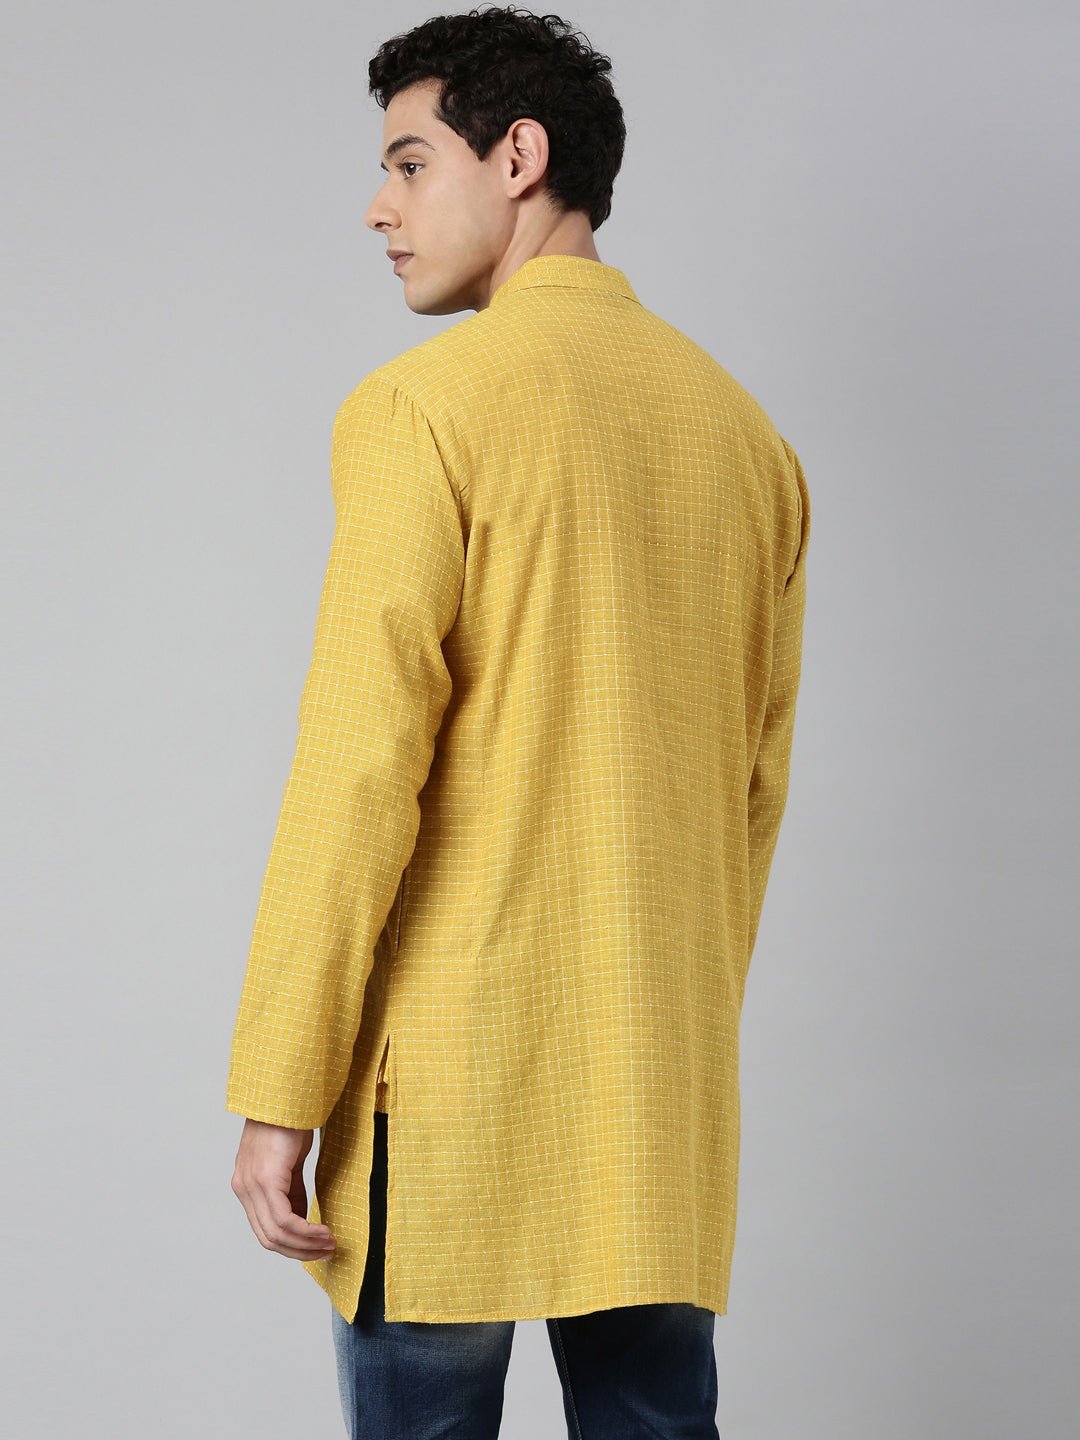 Buy Tattva Yellow Short Kurta with Pattern with Madarin Collar - Back View - Tattva.Life